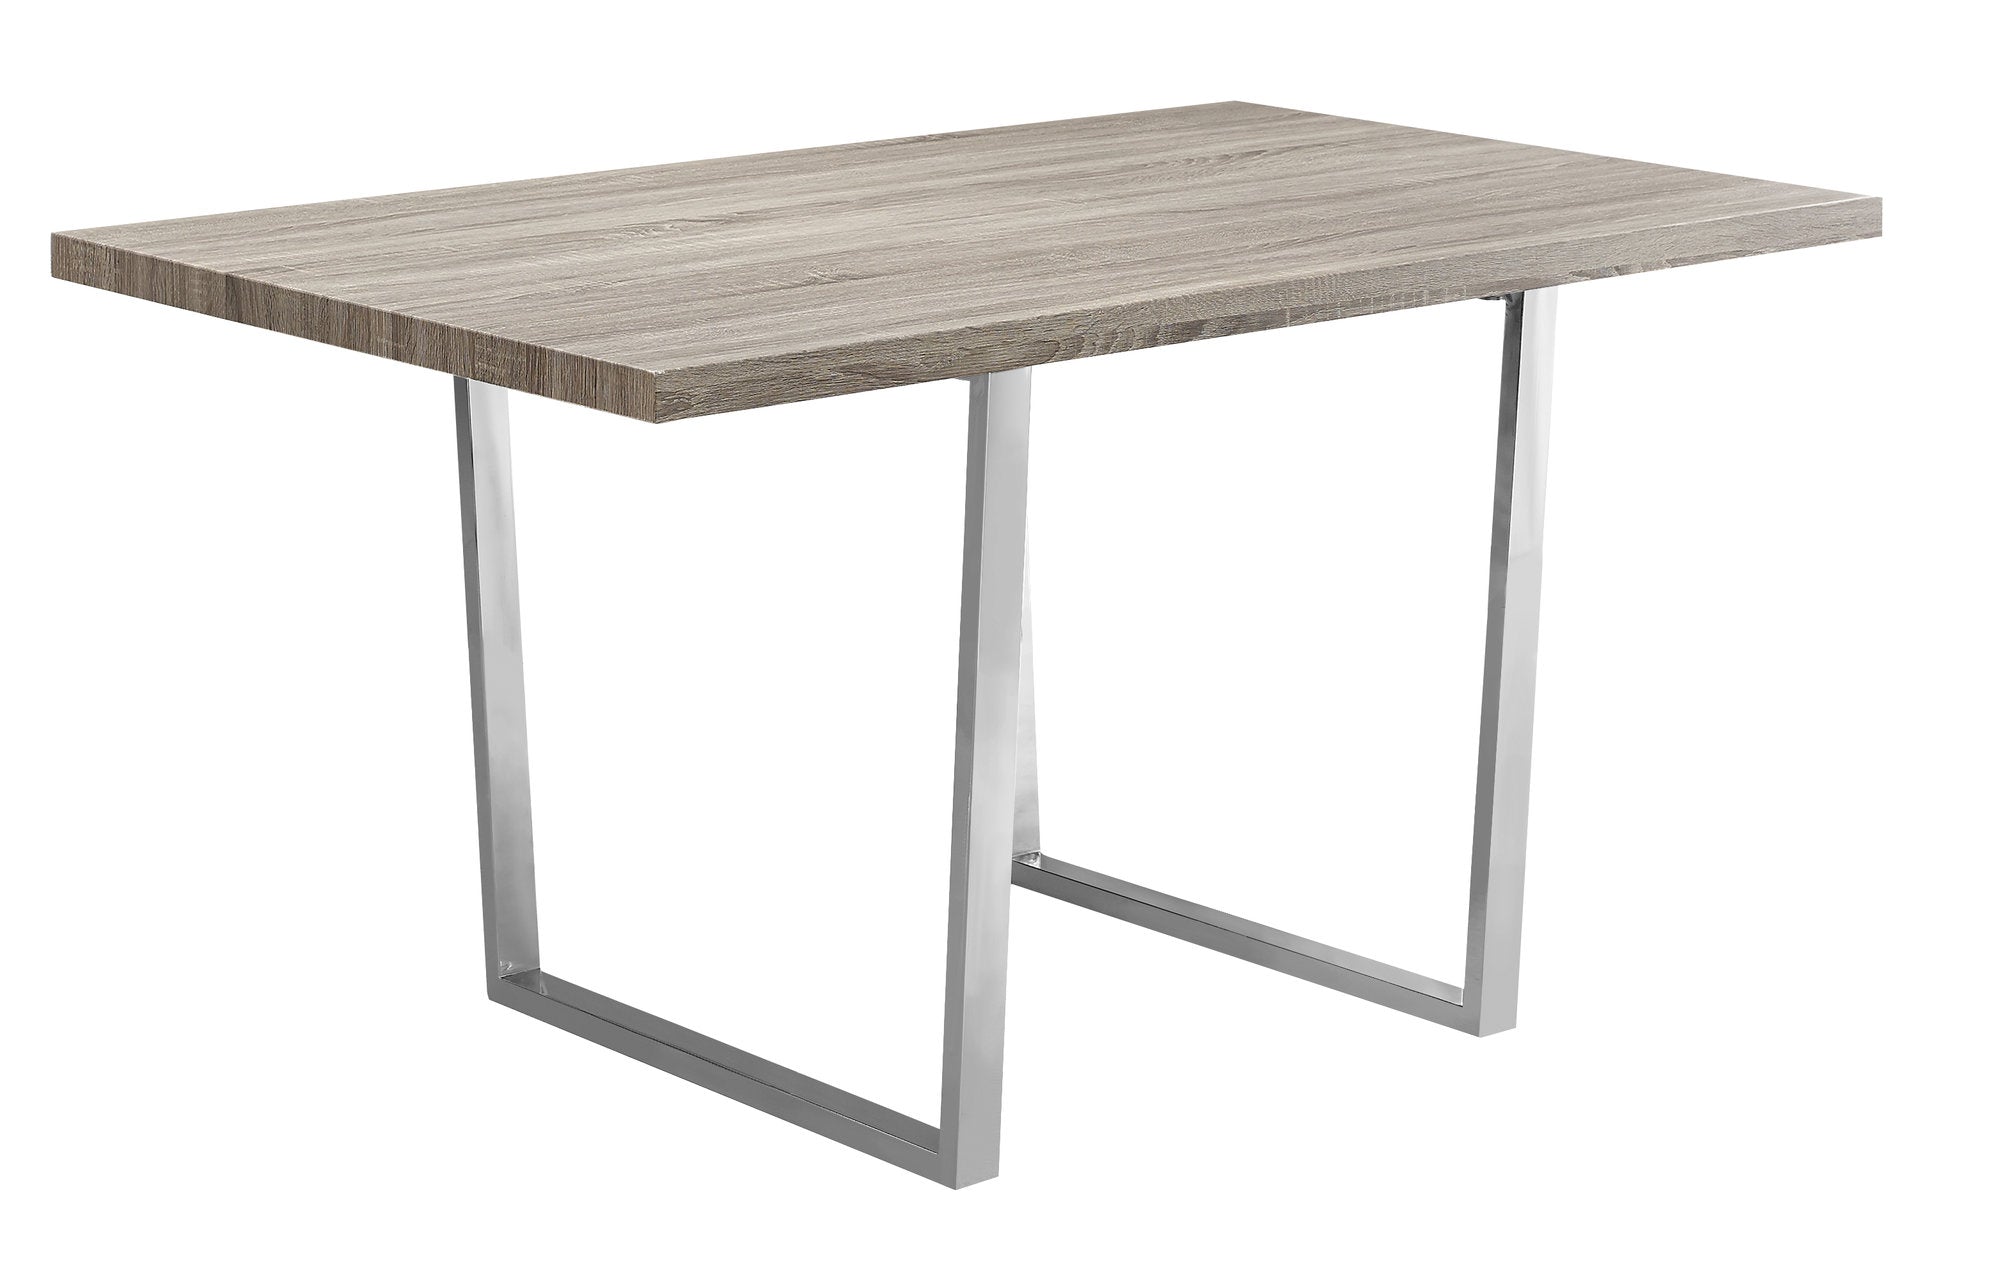 MN-611121    Dining Table, 60" Rectangular, Metal, Kitchen, Dining Room, Metal Legs, Laminate, Dark Taupe, Chrome, Contemporary, Modern